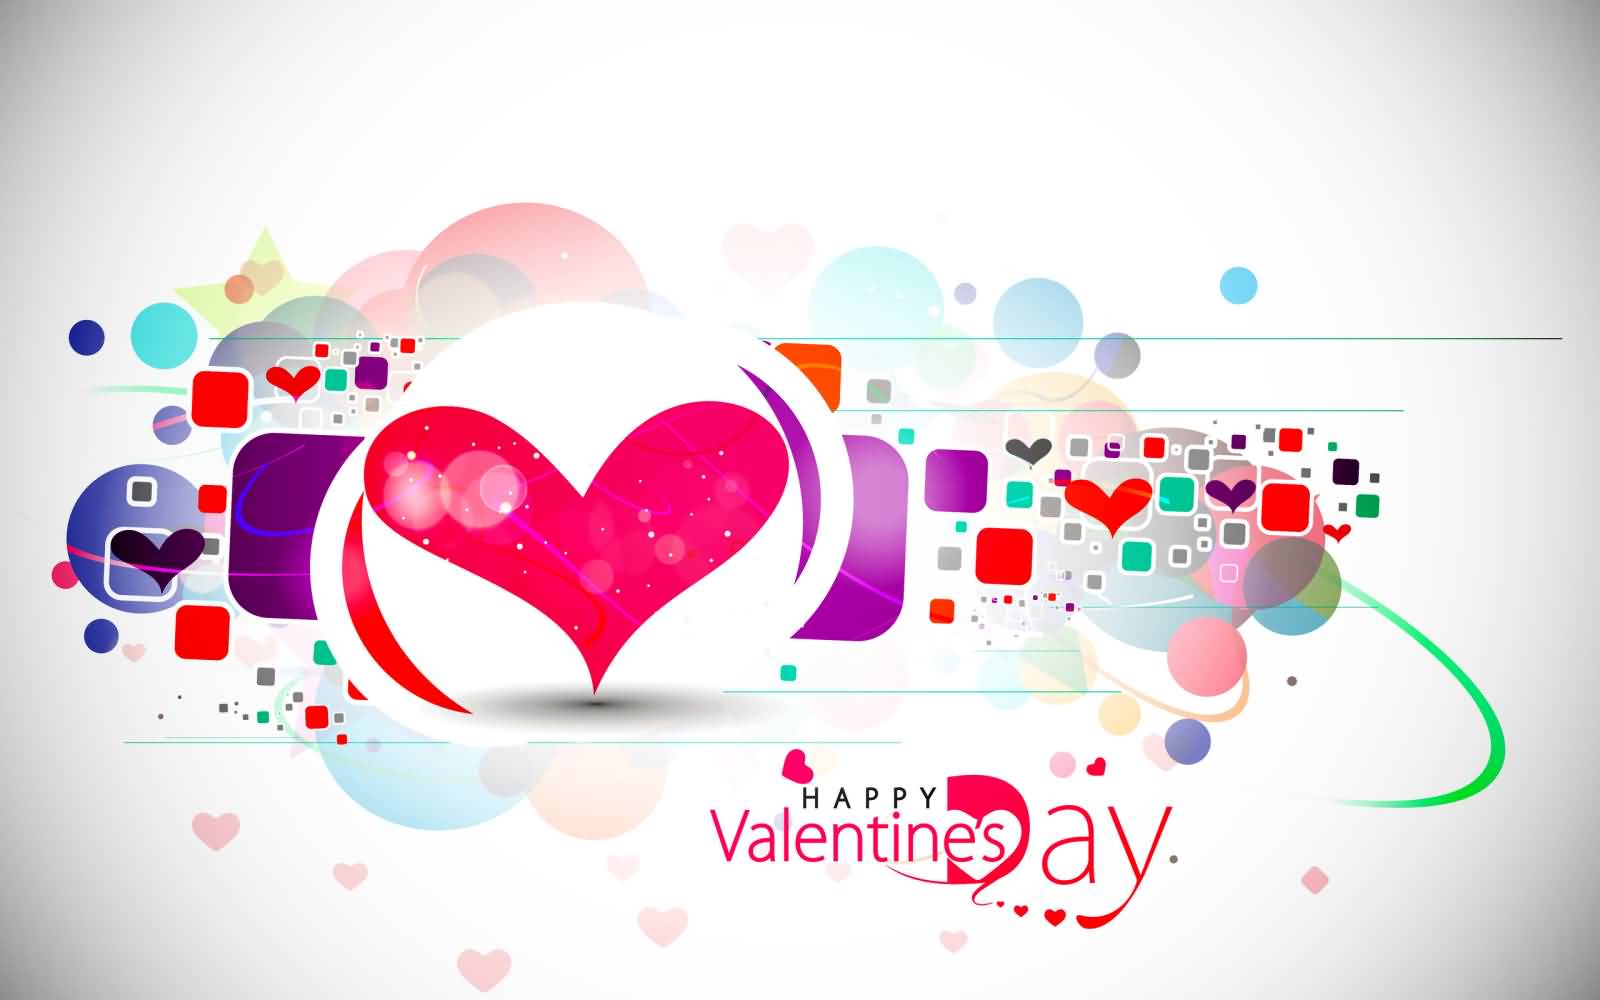 Happy Valentine's Day Colorful Hearts Wallpaper